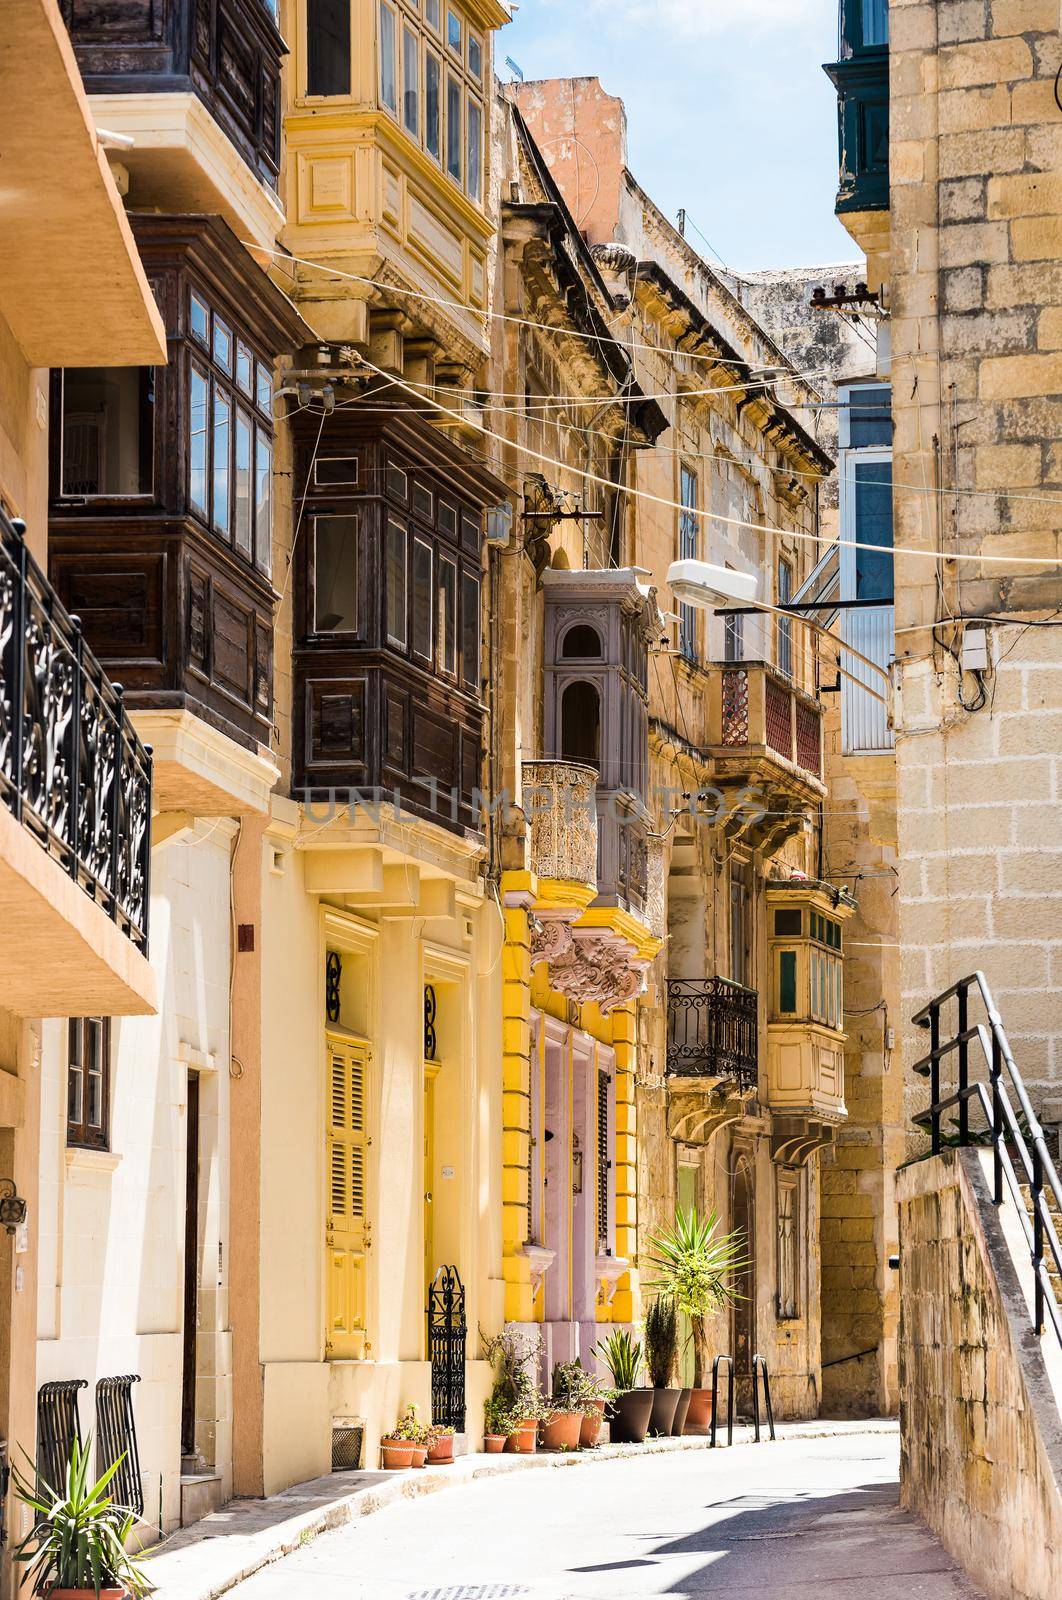 picturesque typical narrow street of Valletta in Malta